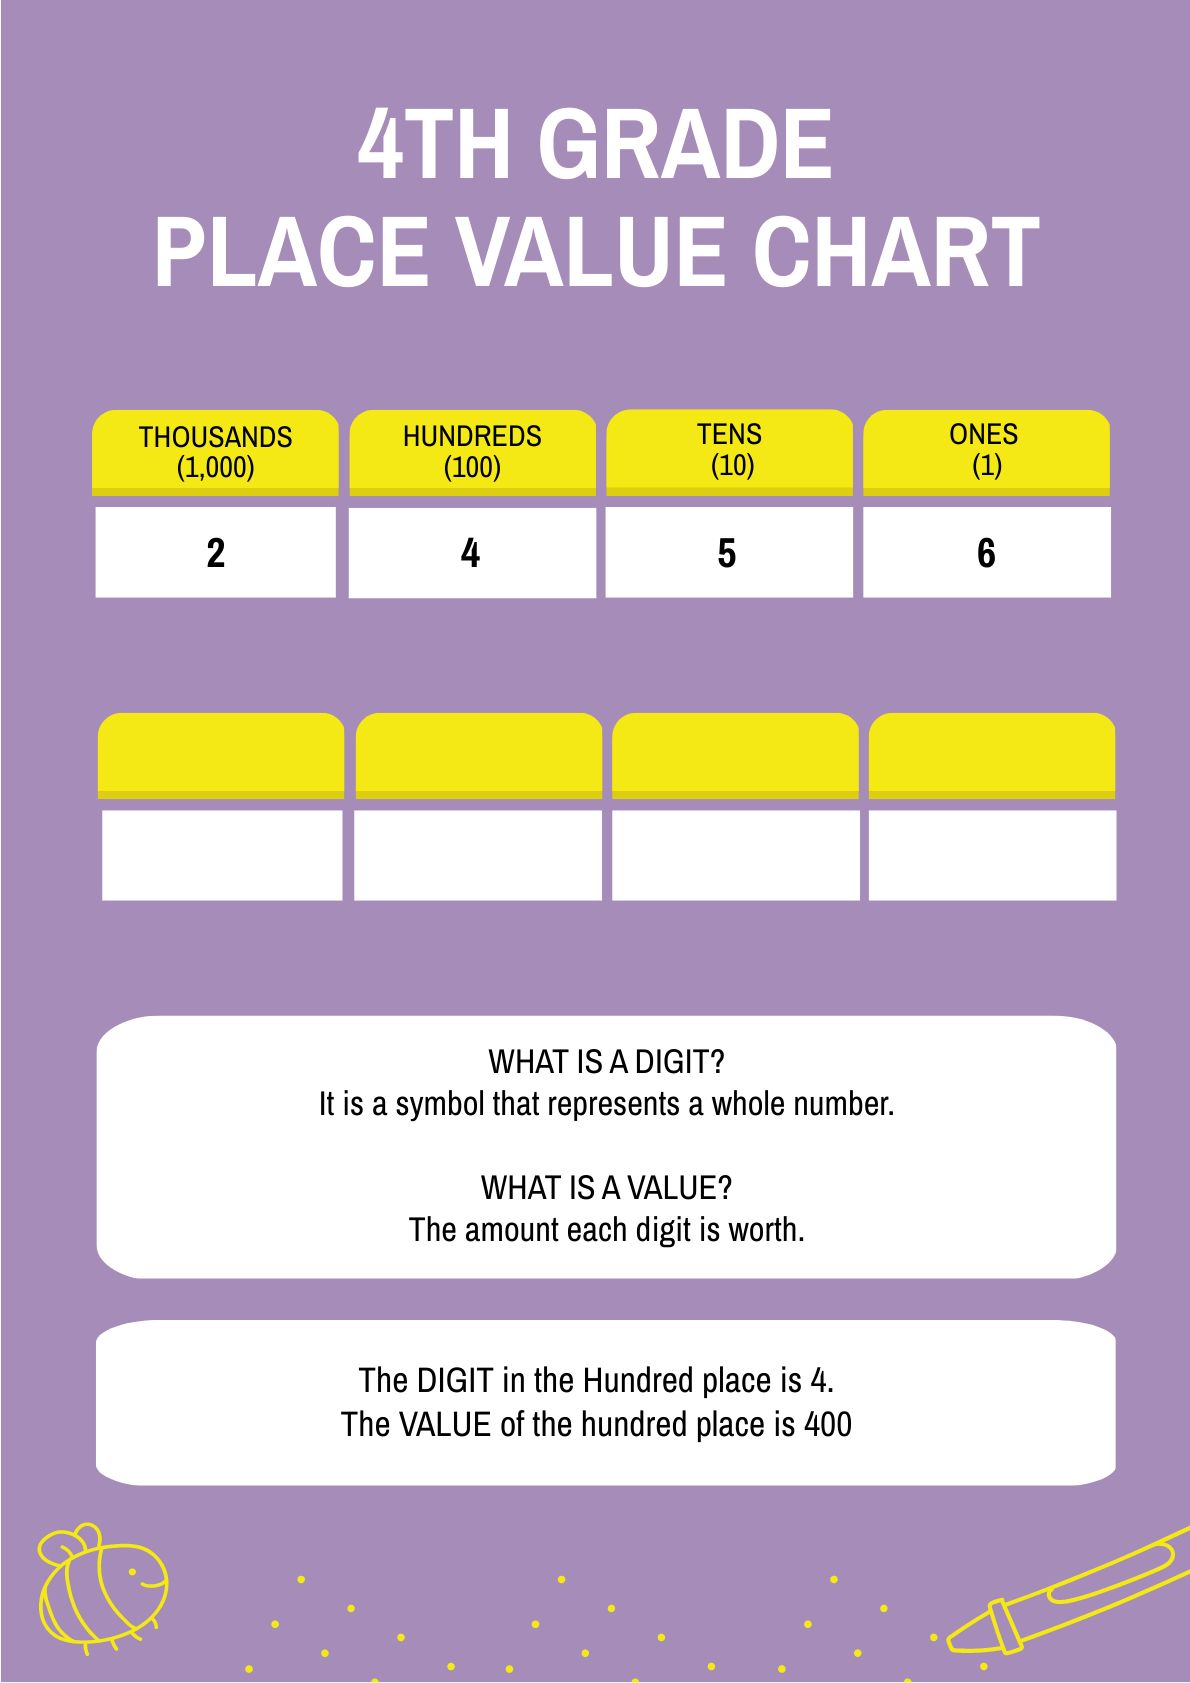 4th Grade Place Value Chart in PDF, Illustrator